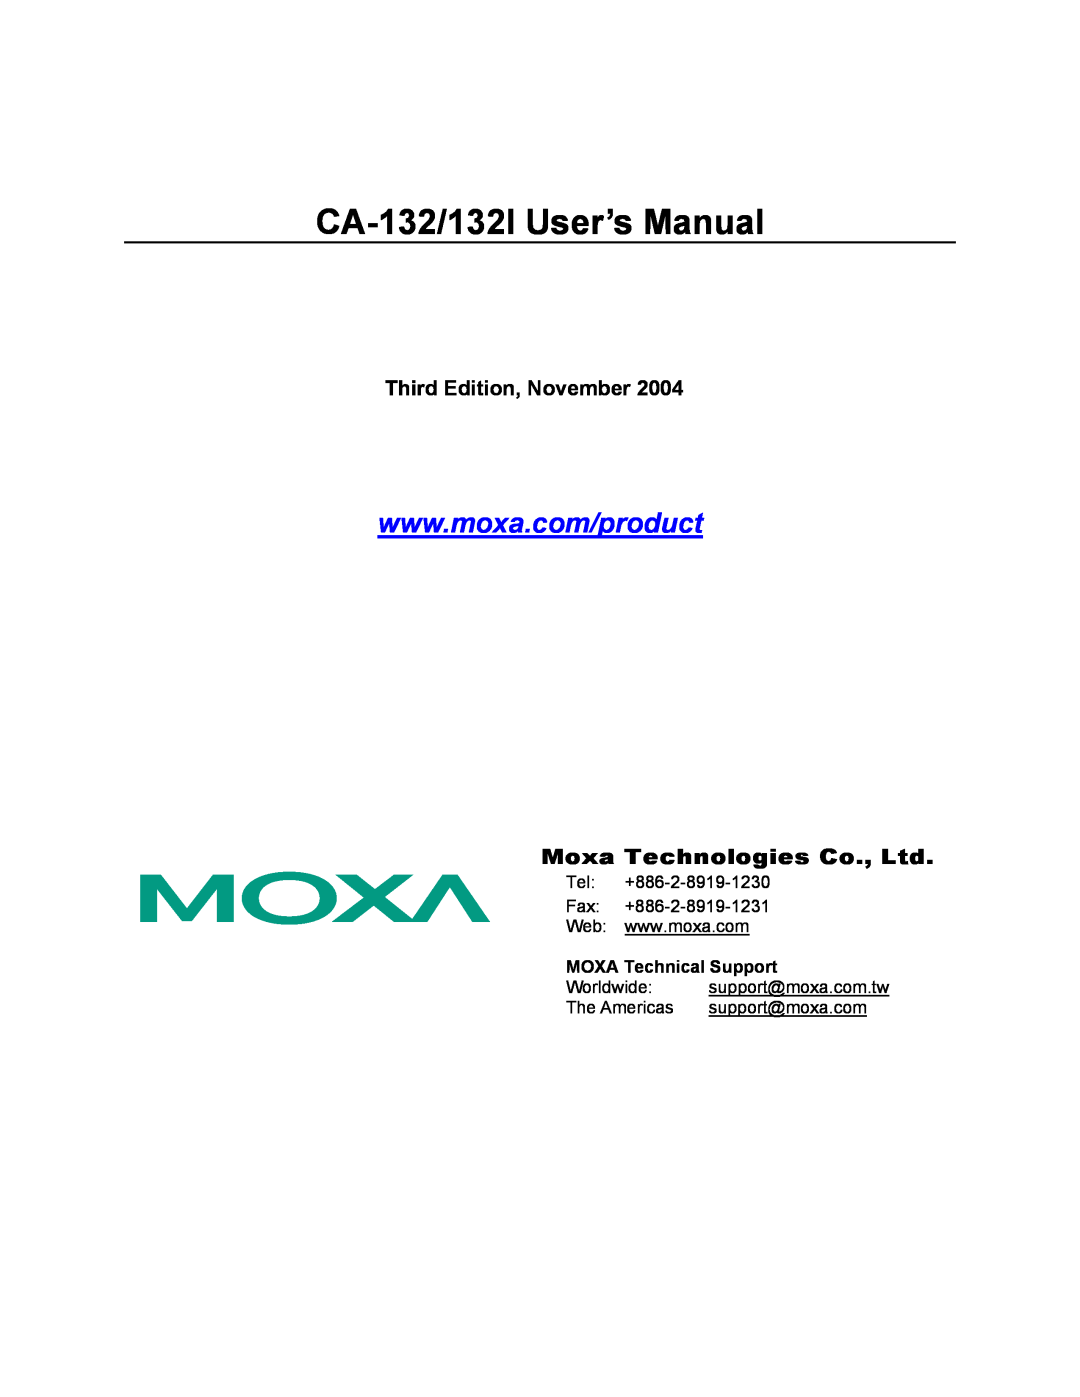 Moxa Technologies user manual CA-132/132I User’s Manual, Third Edition, November, MOXA Technical Support 